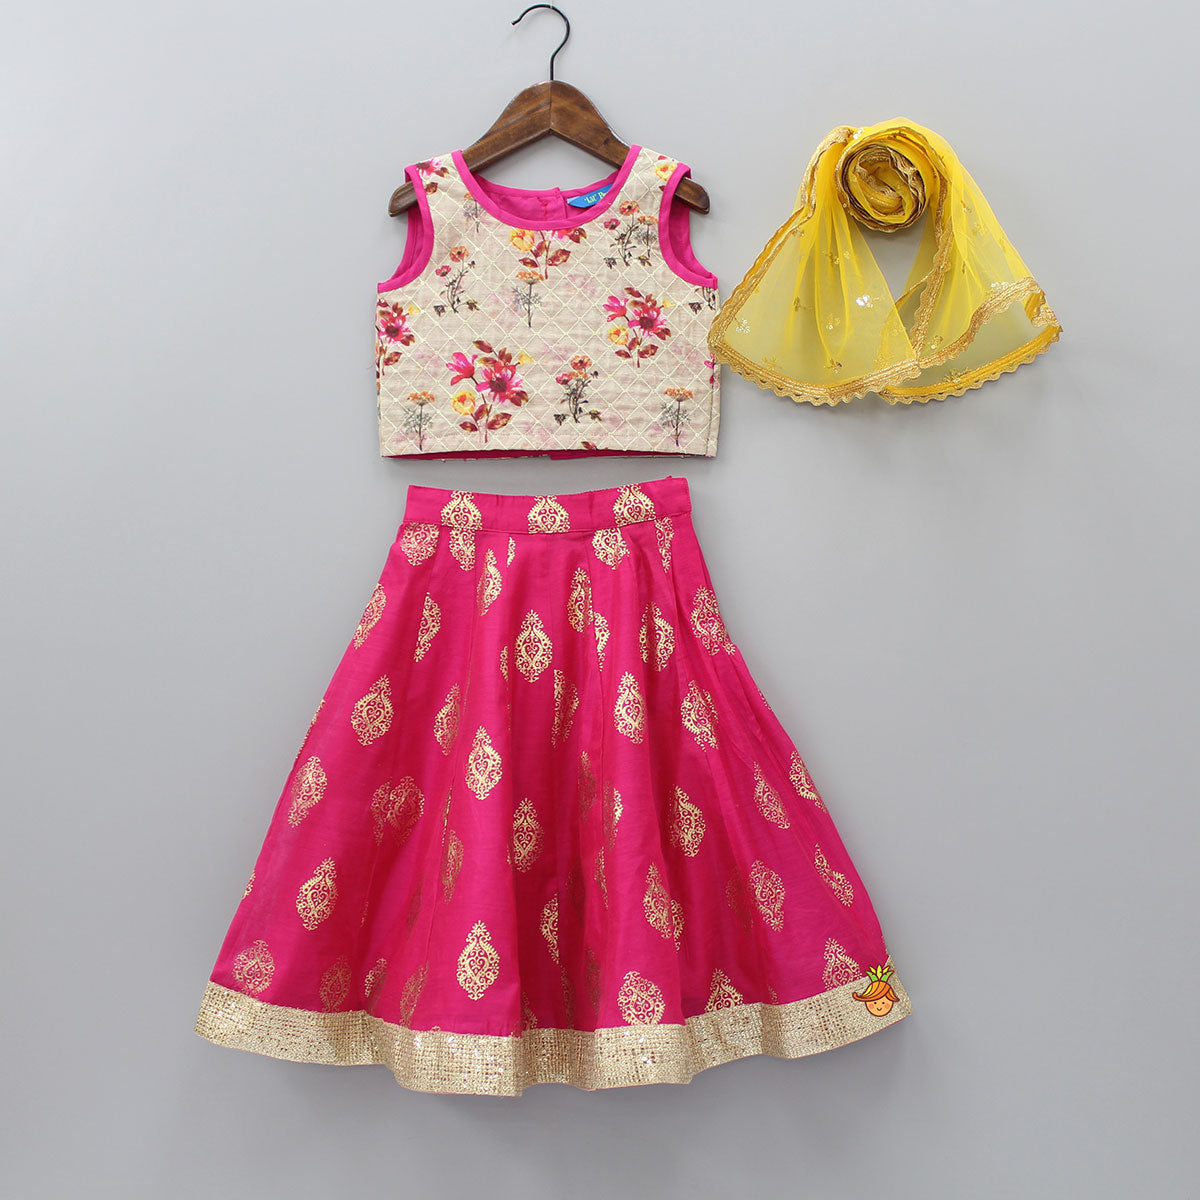 ethnic dress for girl baby